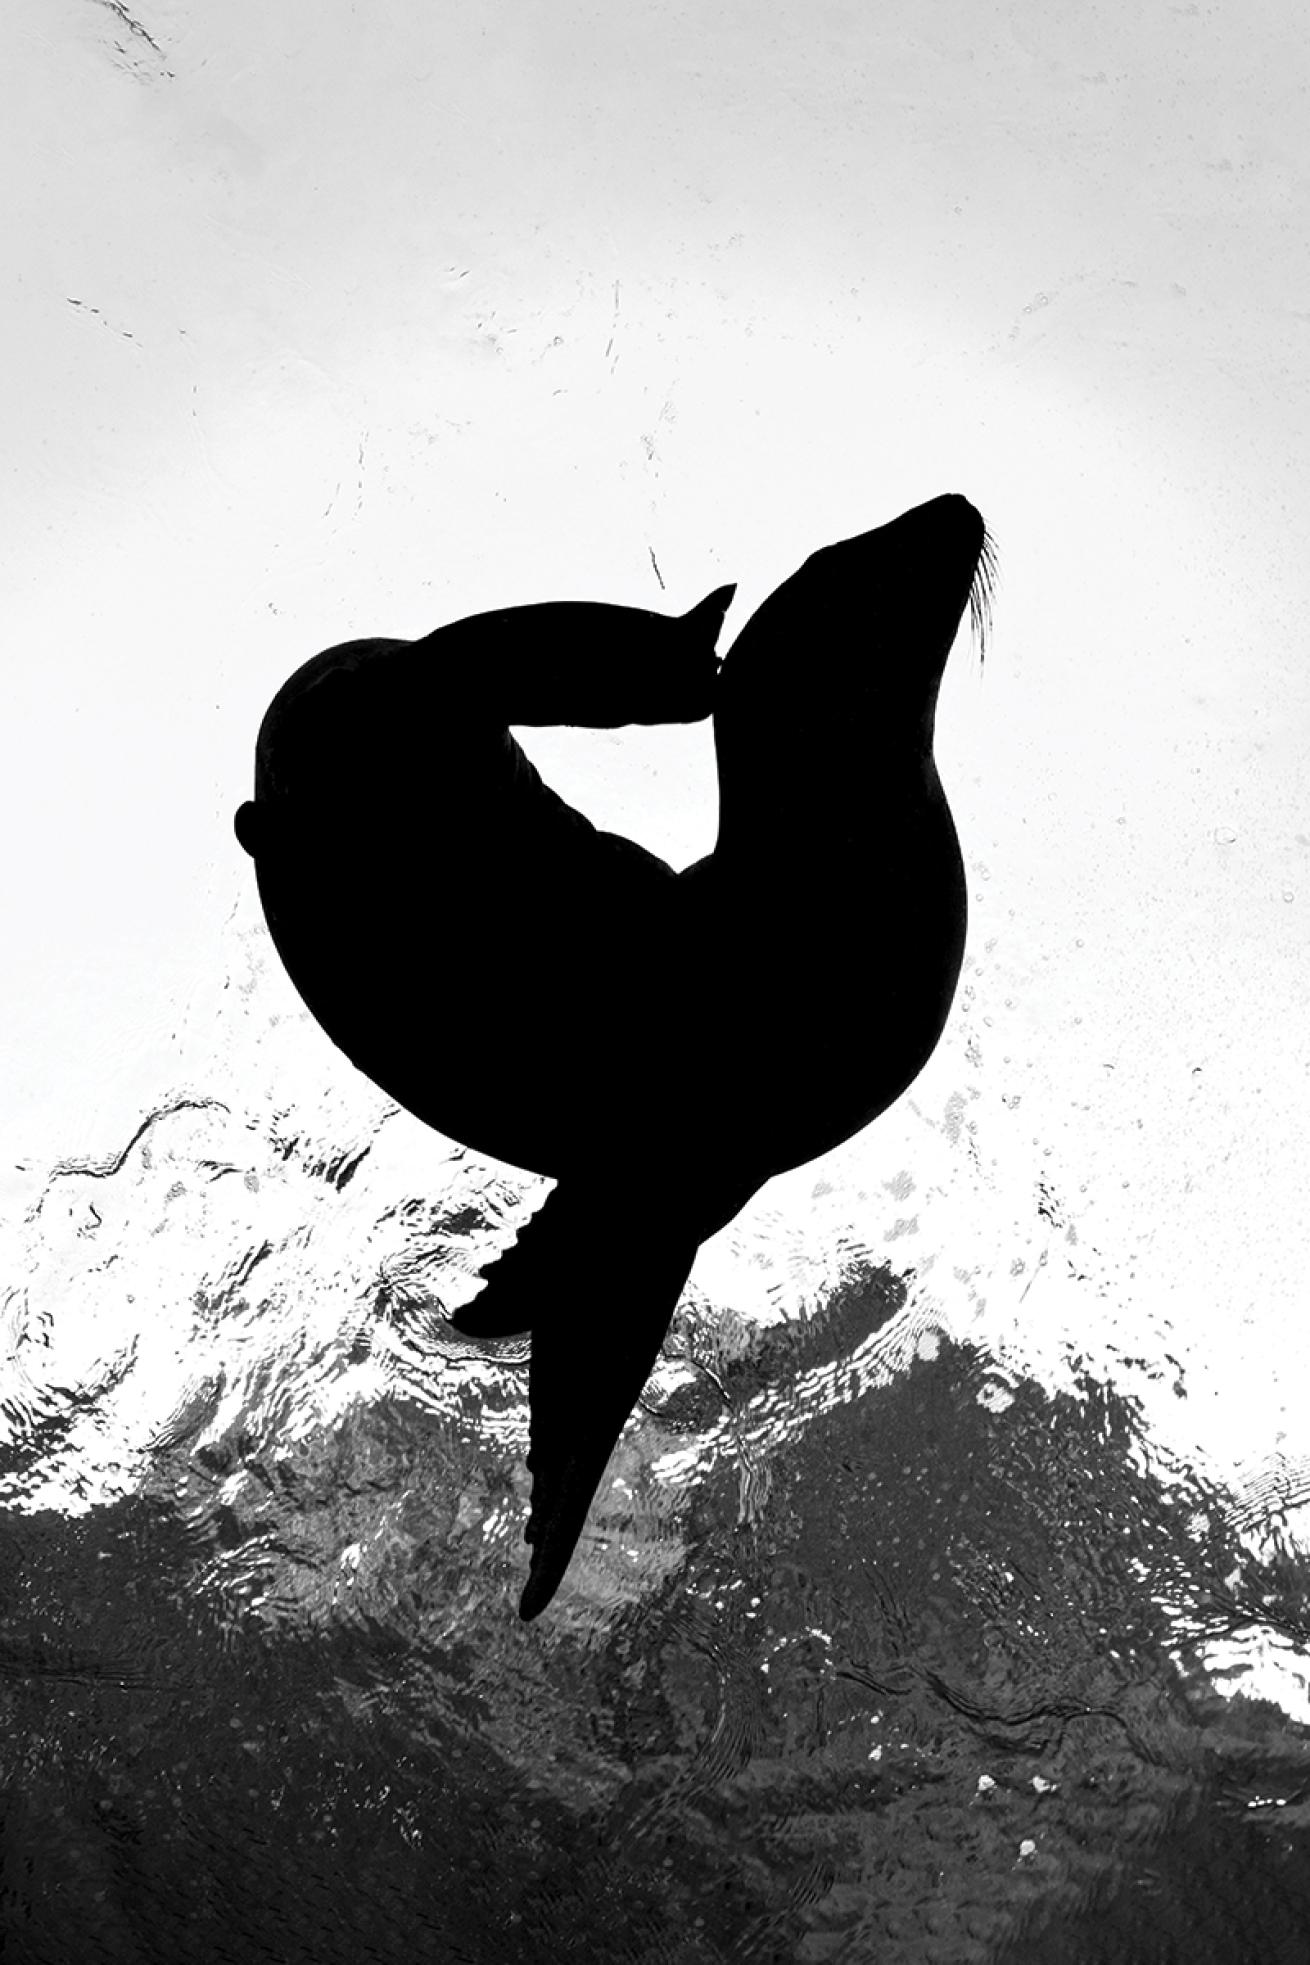 Sea lion silhouette